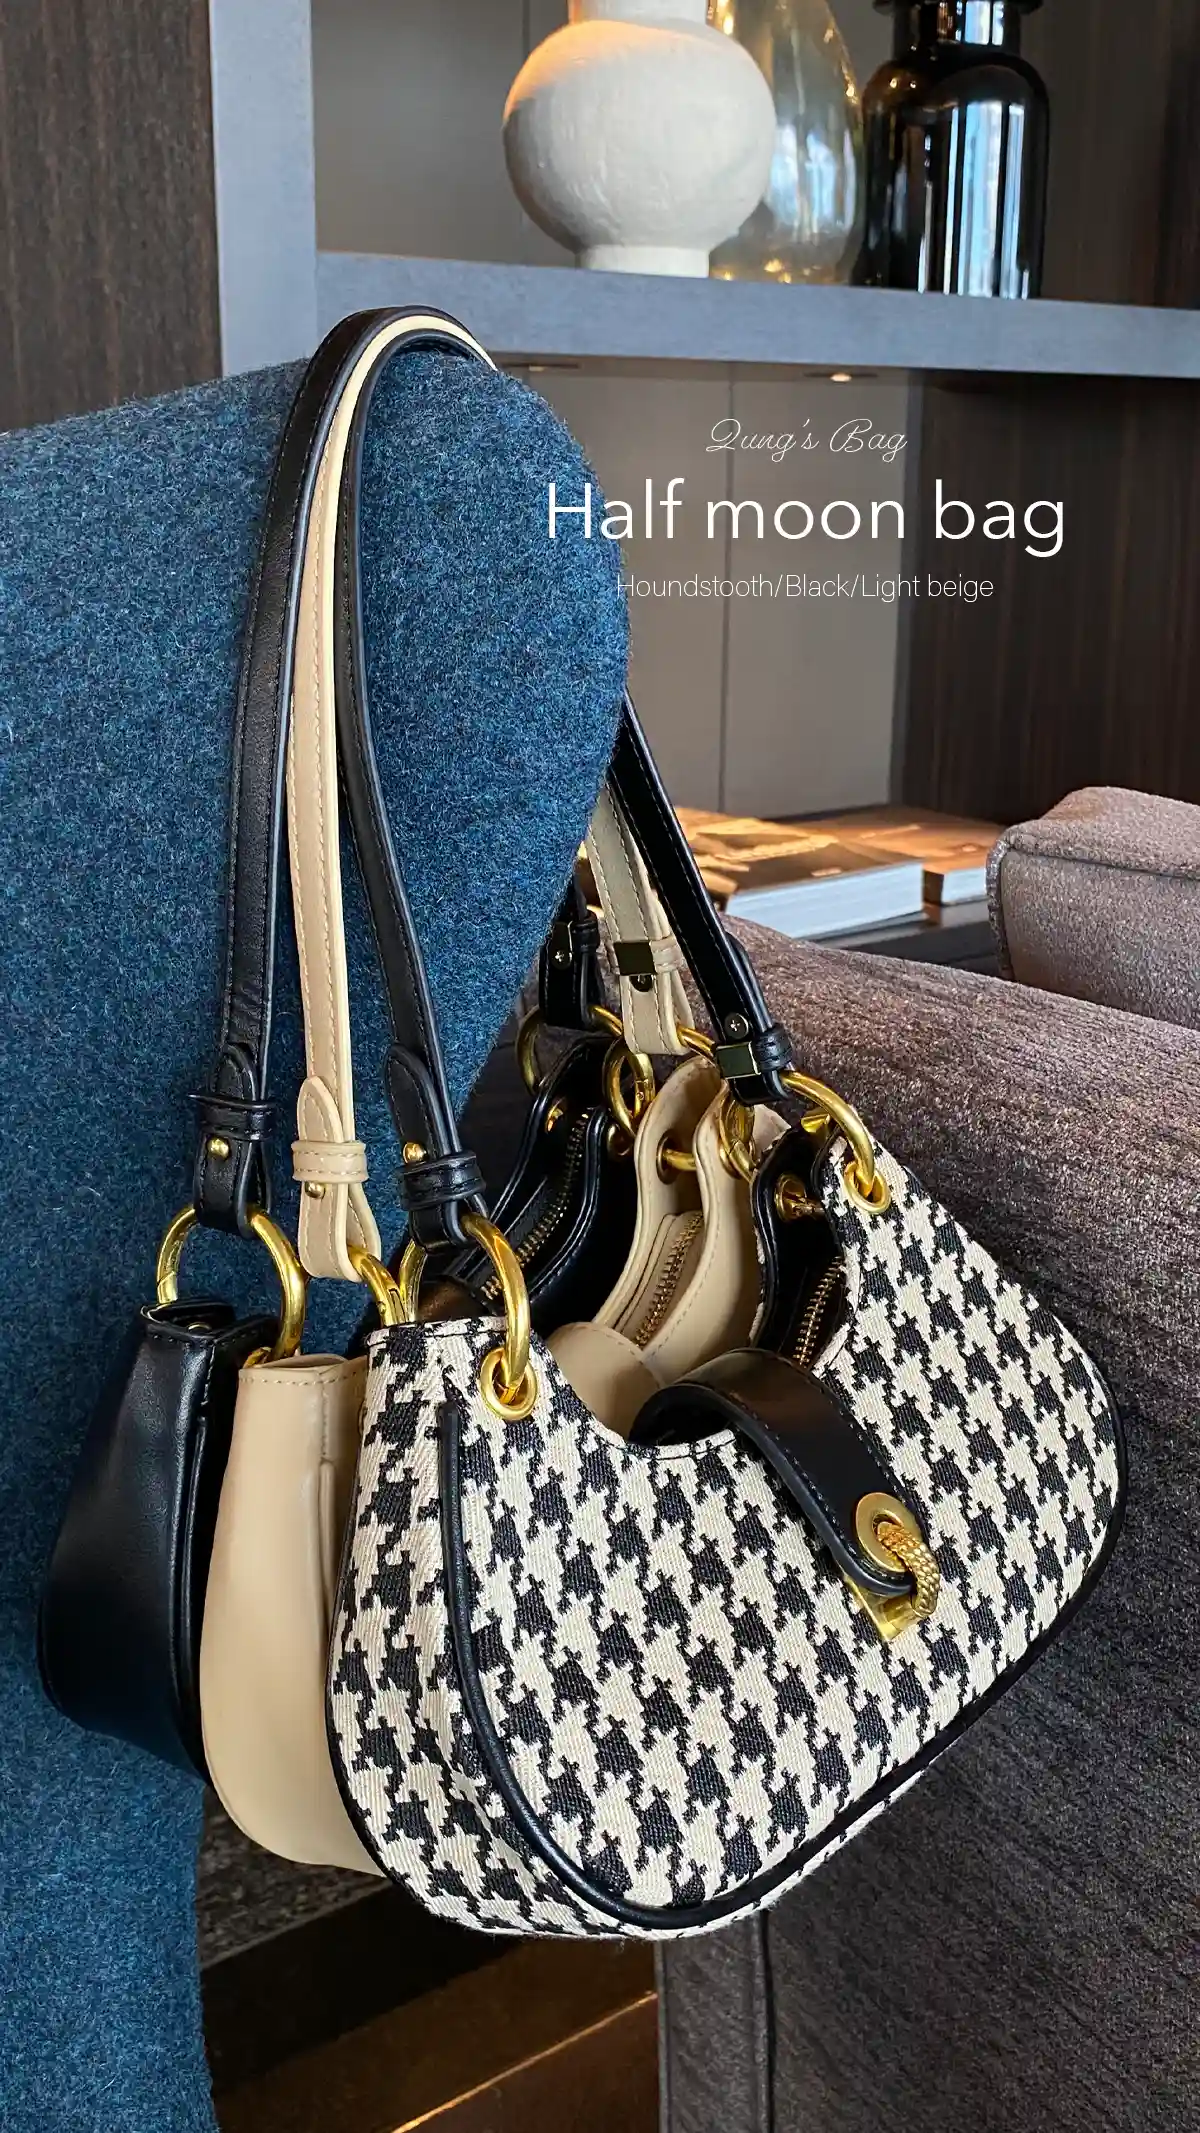 Half moon bag カラー: ブラック、ライトベージュ、千鳥格子